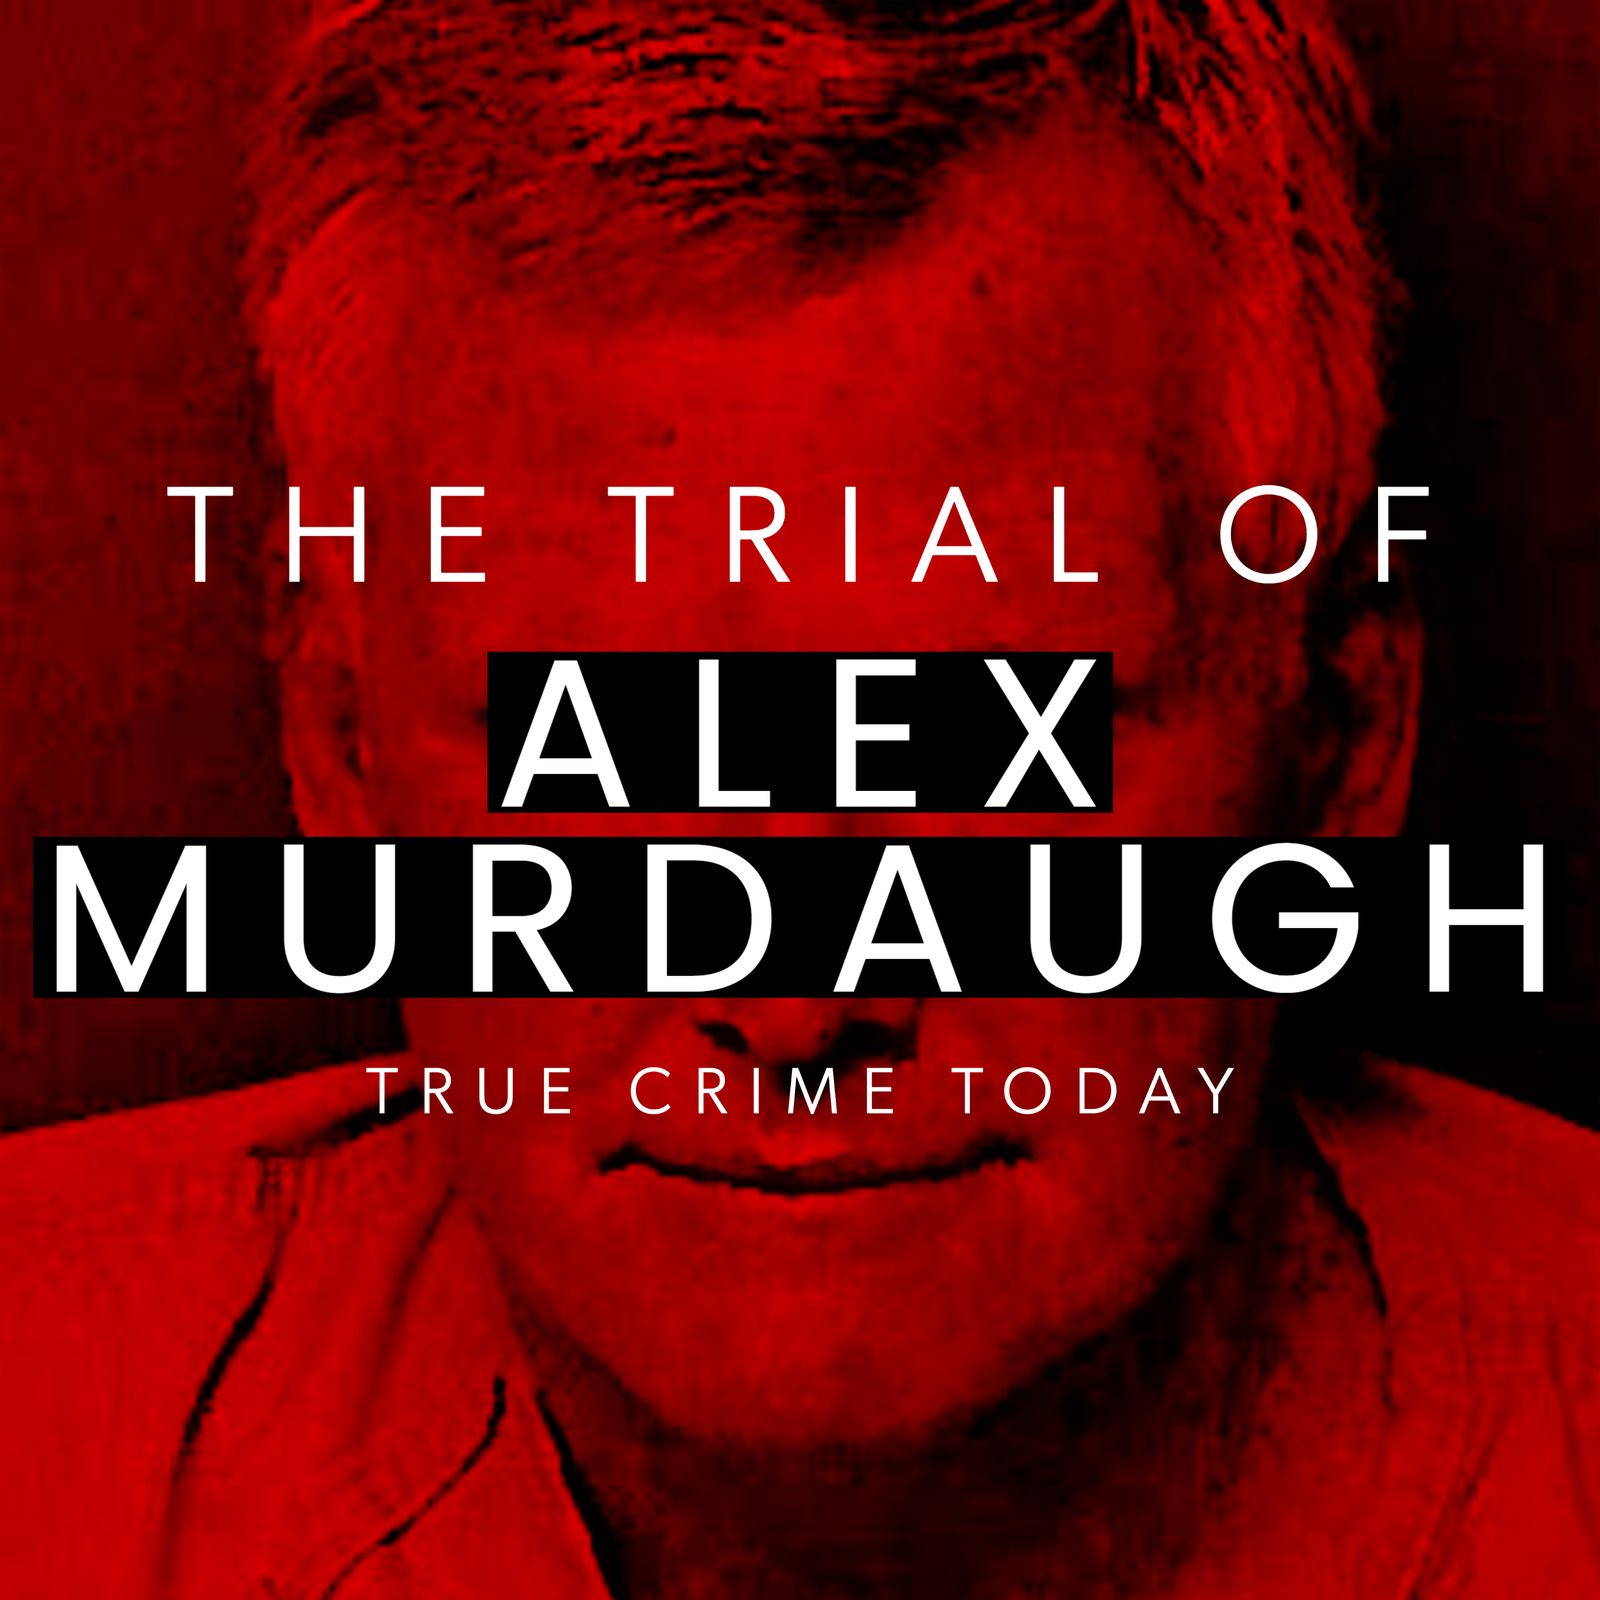 GUILTY-Murdaugh Strikes Plea Deal in Financial Crimes Case-RAW COURTROOM AUDIO PART 1